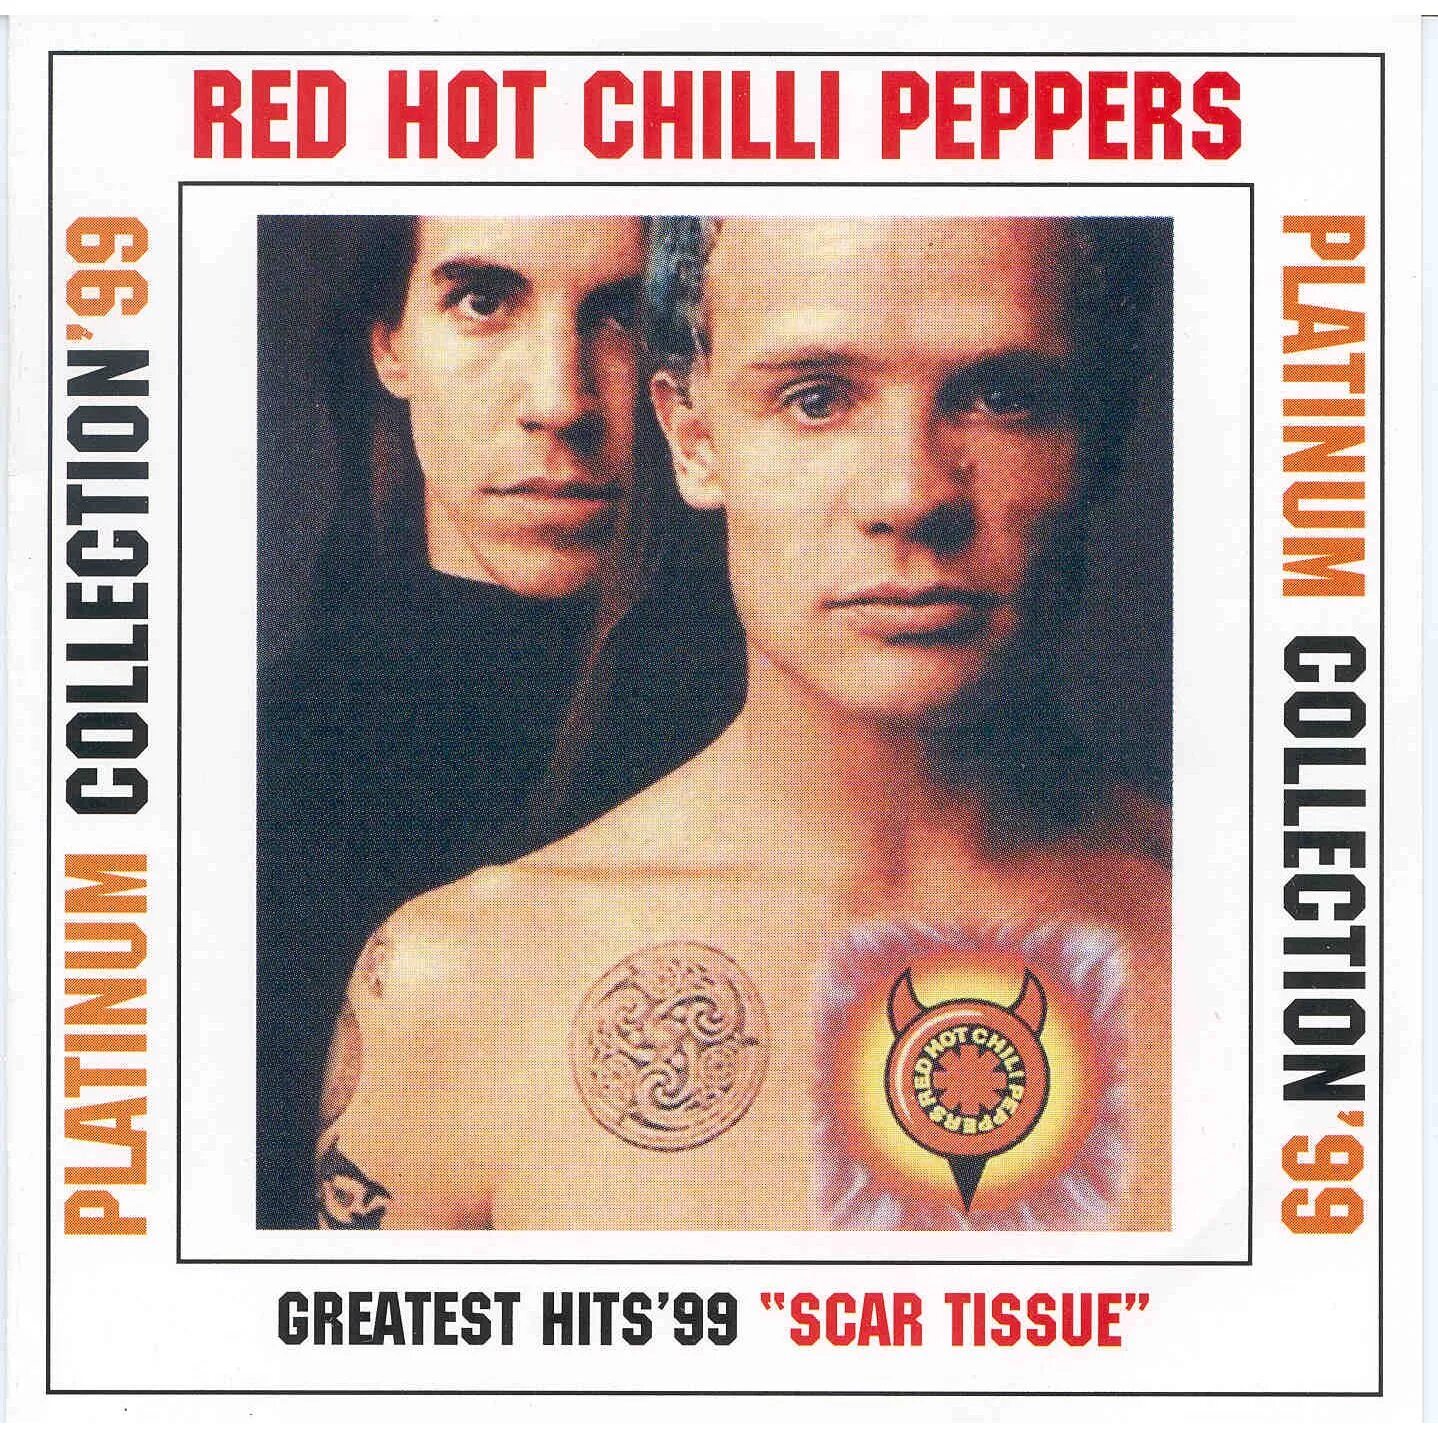 Ред хот Чили Пепперс. Red hot Chili Peppers обложка. Red hot Chili Peppers альбомы. RHCP обложки альбомов. Red hot chili peppers mp3